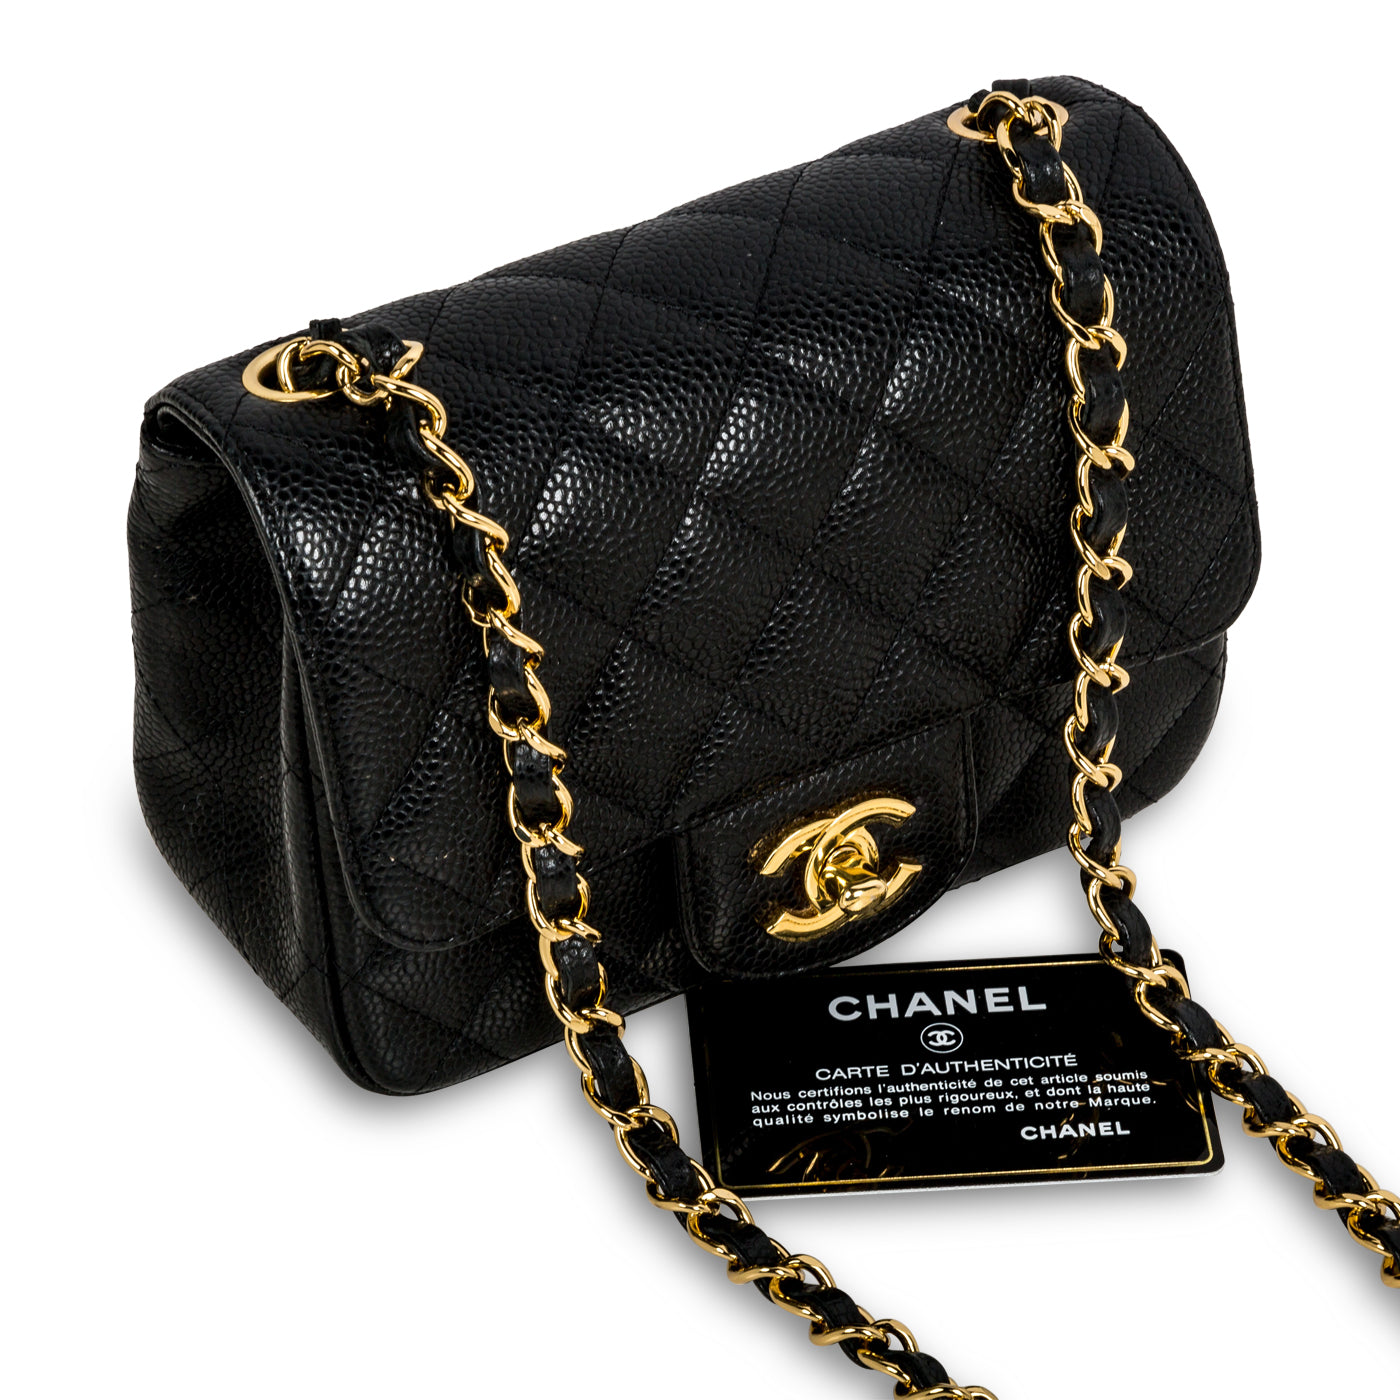 Chanel Extra Mini Classic Flap Bag in Black Caviar in SHW